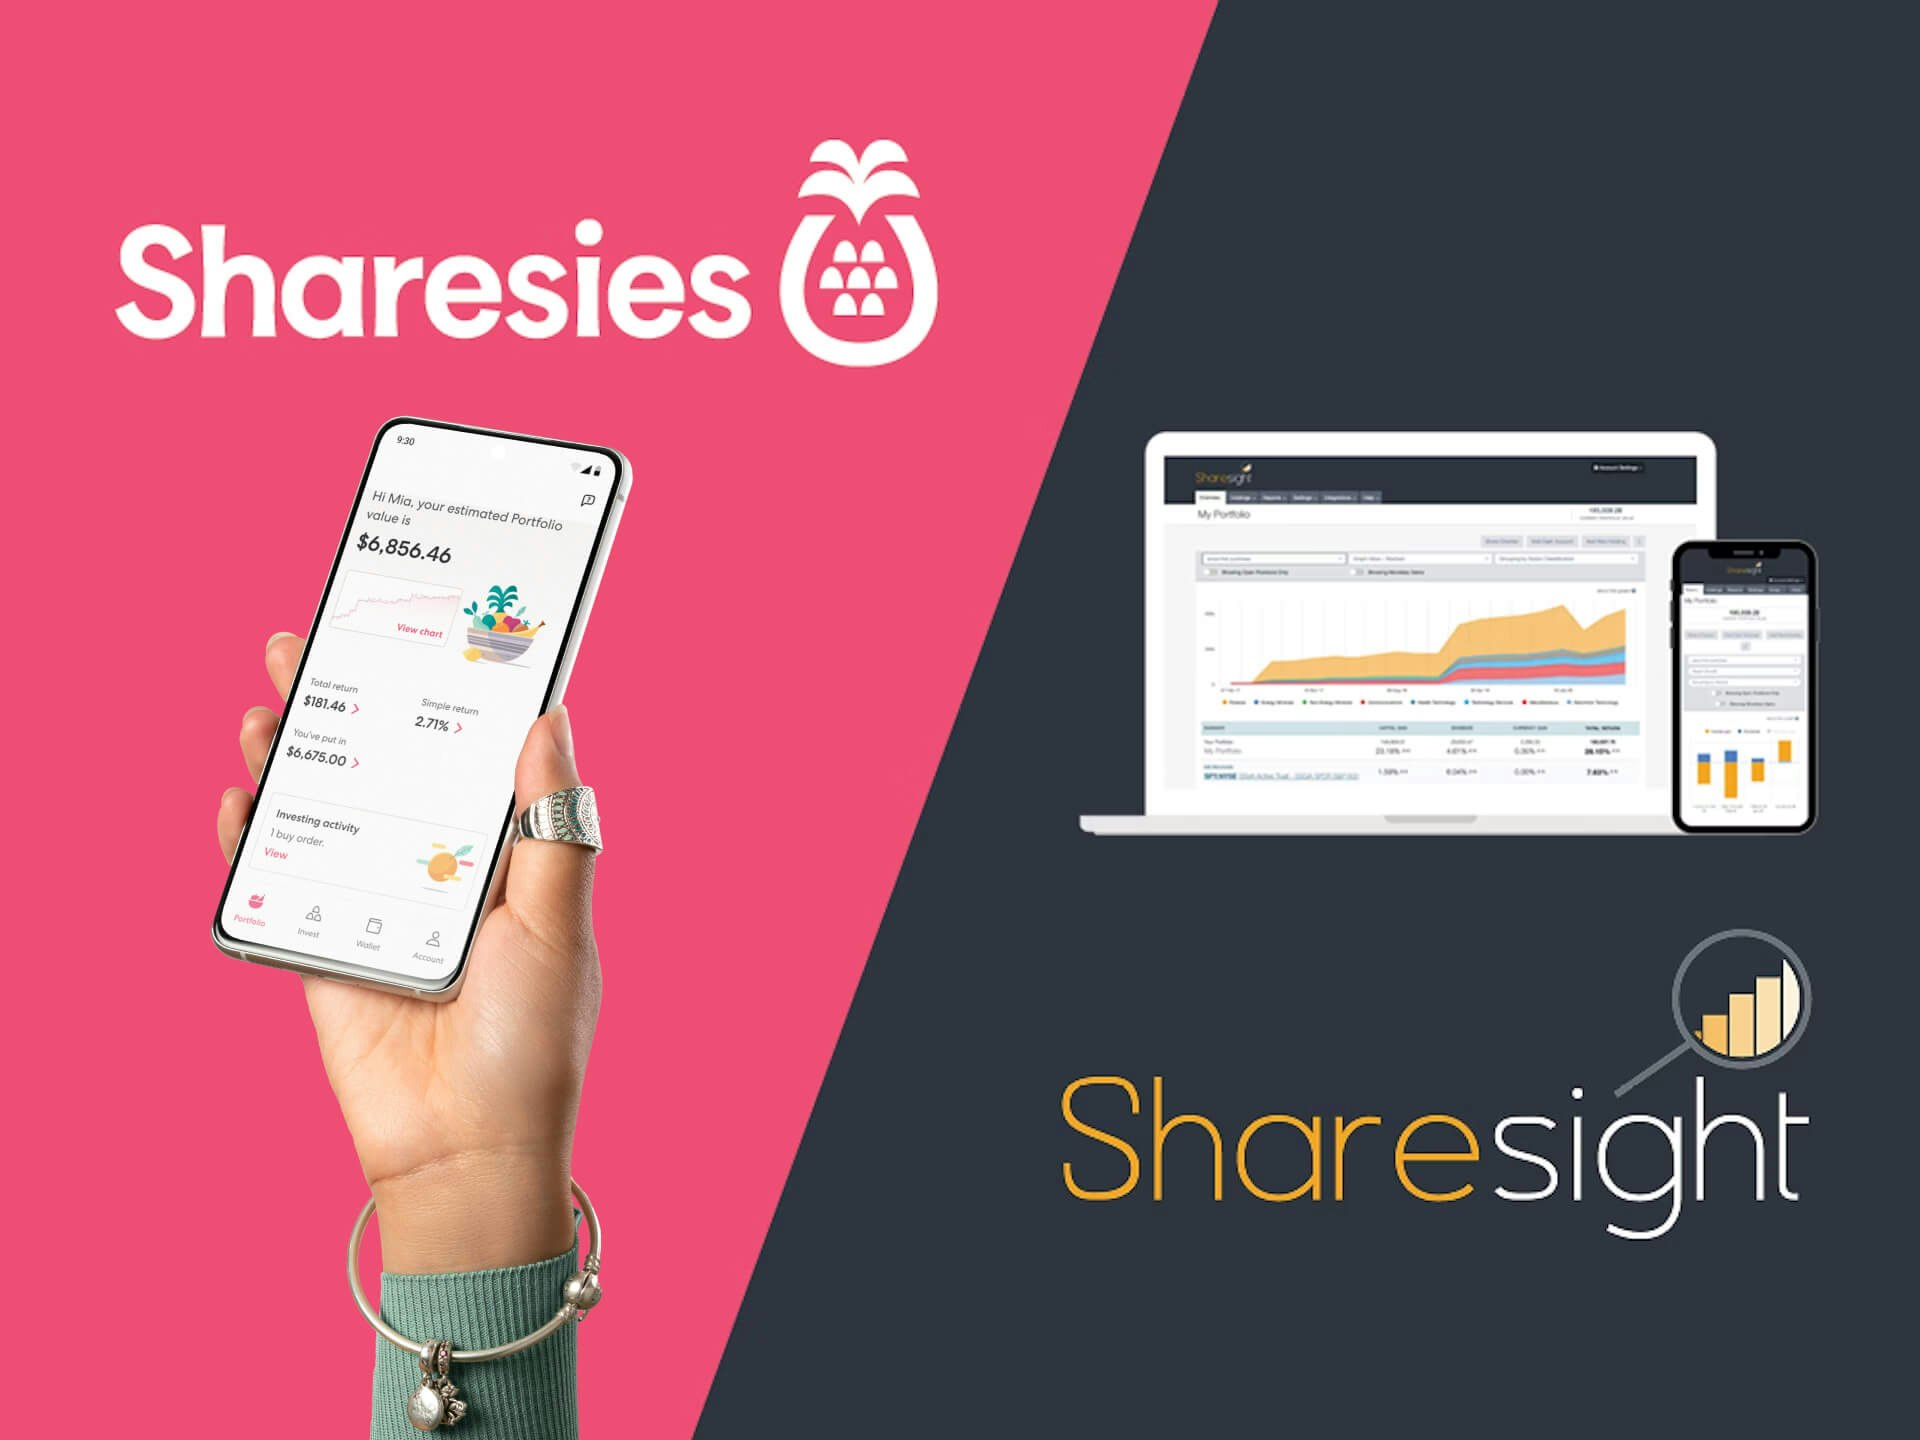 Sharesies and Sharesight logos.